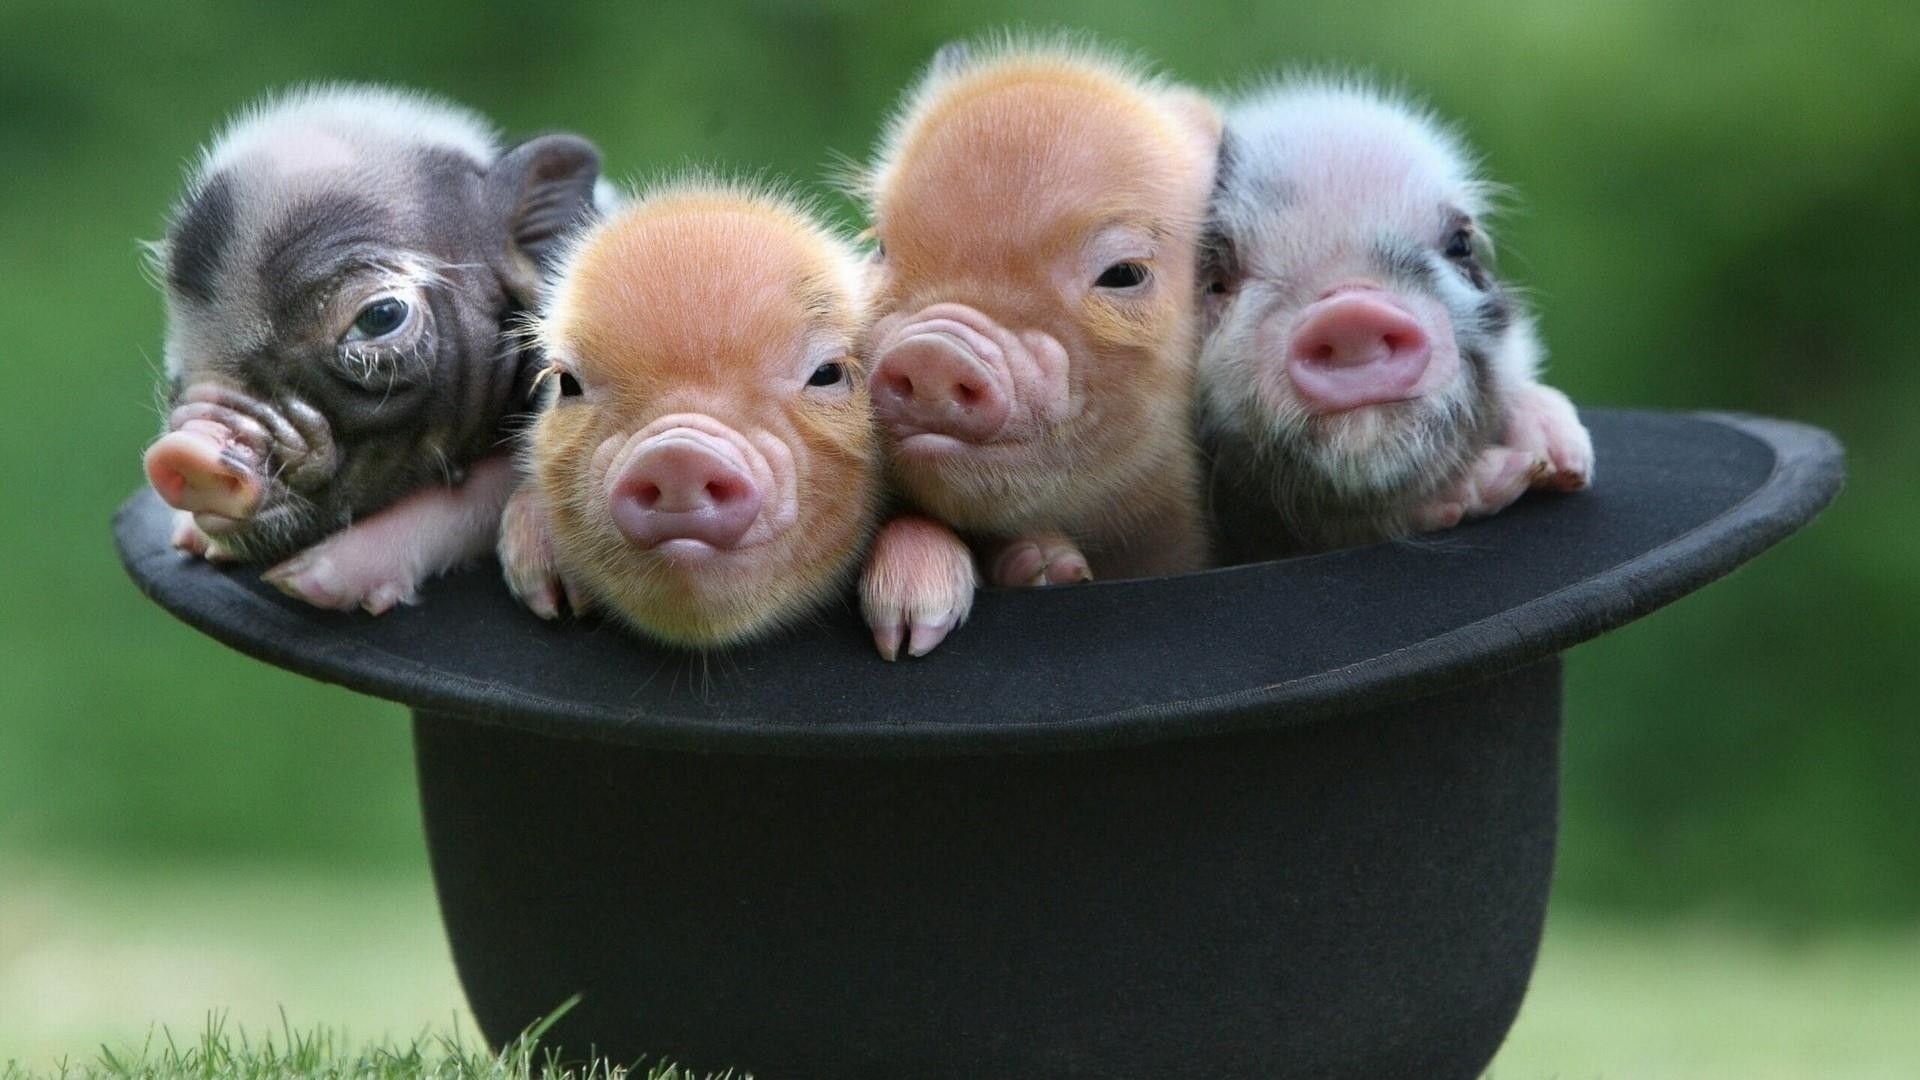 Adorable baby pigs, Cute farm animals, Snuggly cuddles, Gentle oinks, 1920x1080 Full HD Desktop